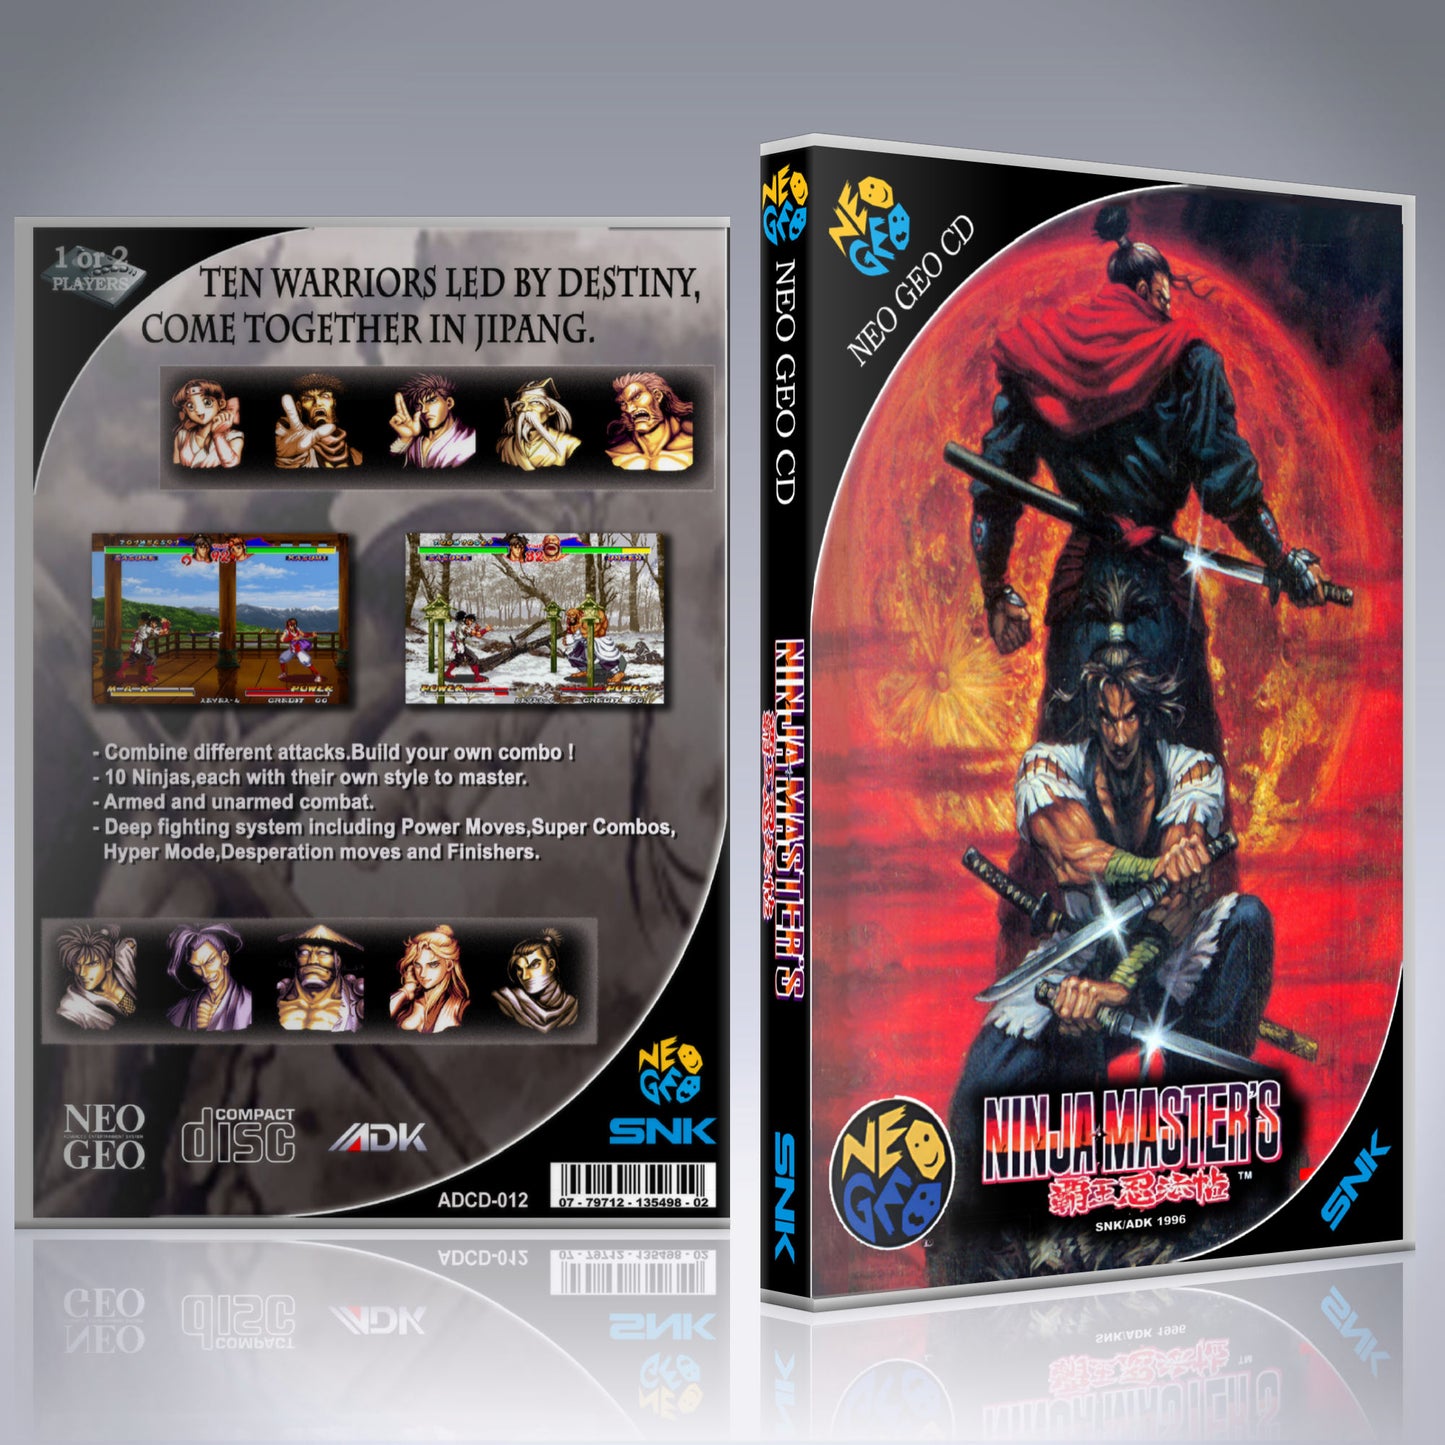 NeoGeo CD Custom Case - NO GAME - Ninja Masters